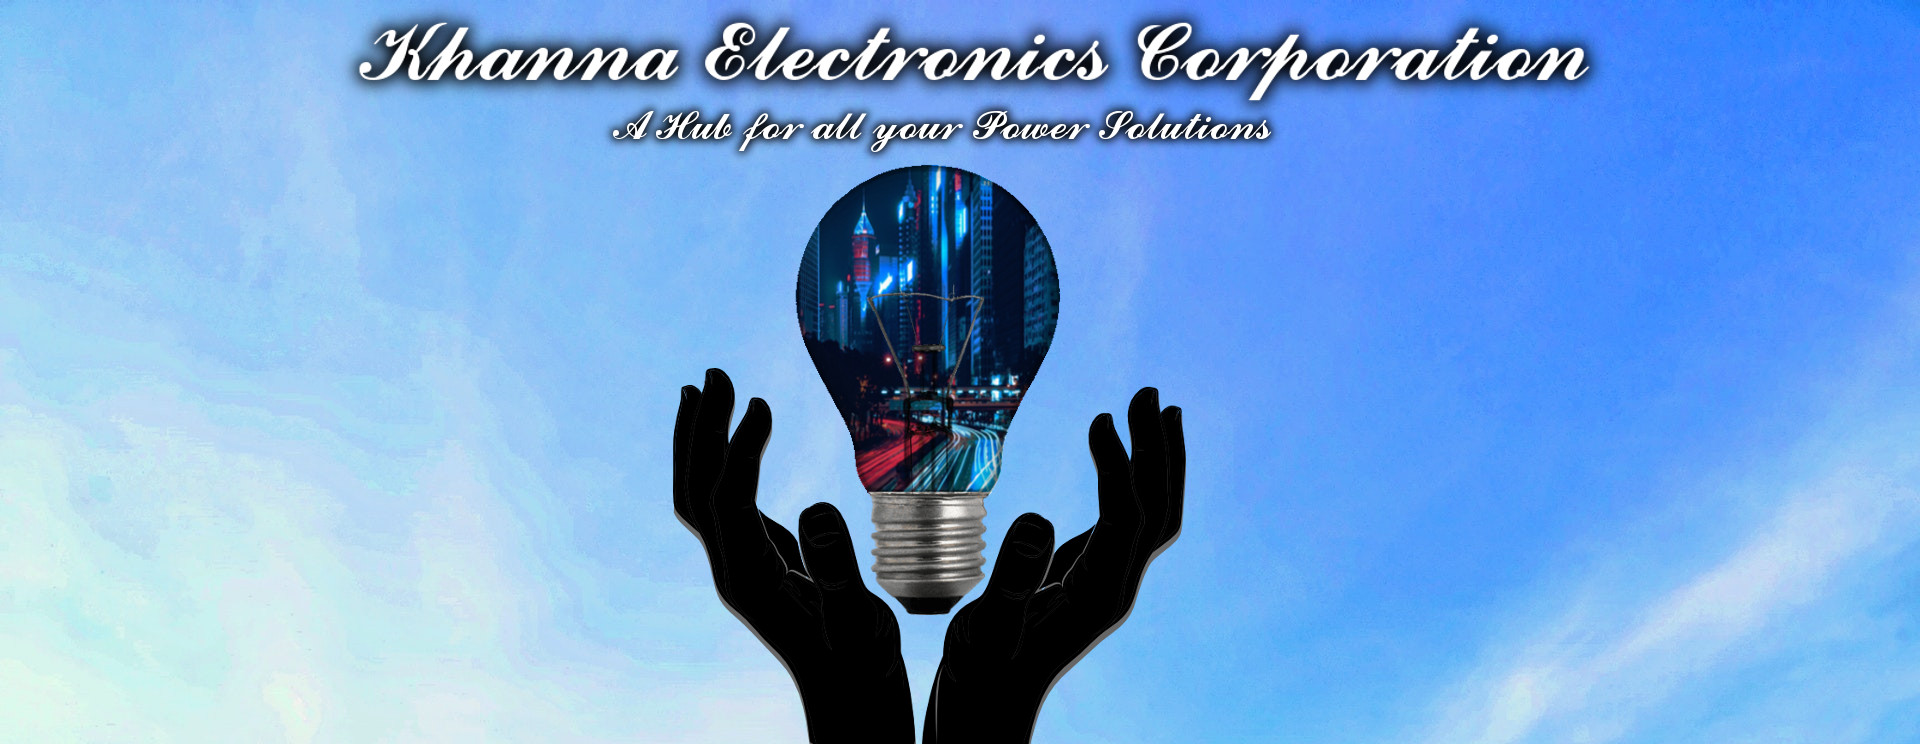 Khanna Electronics Corporation